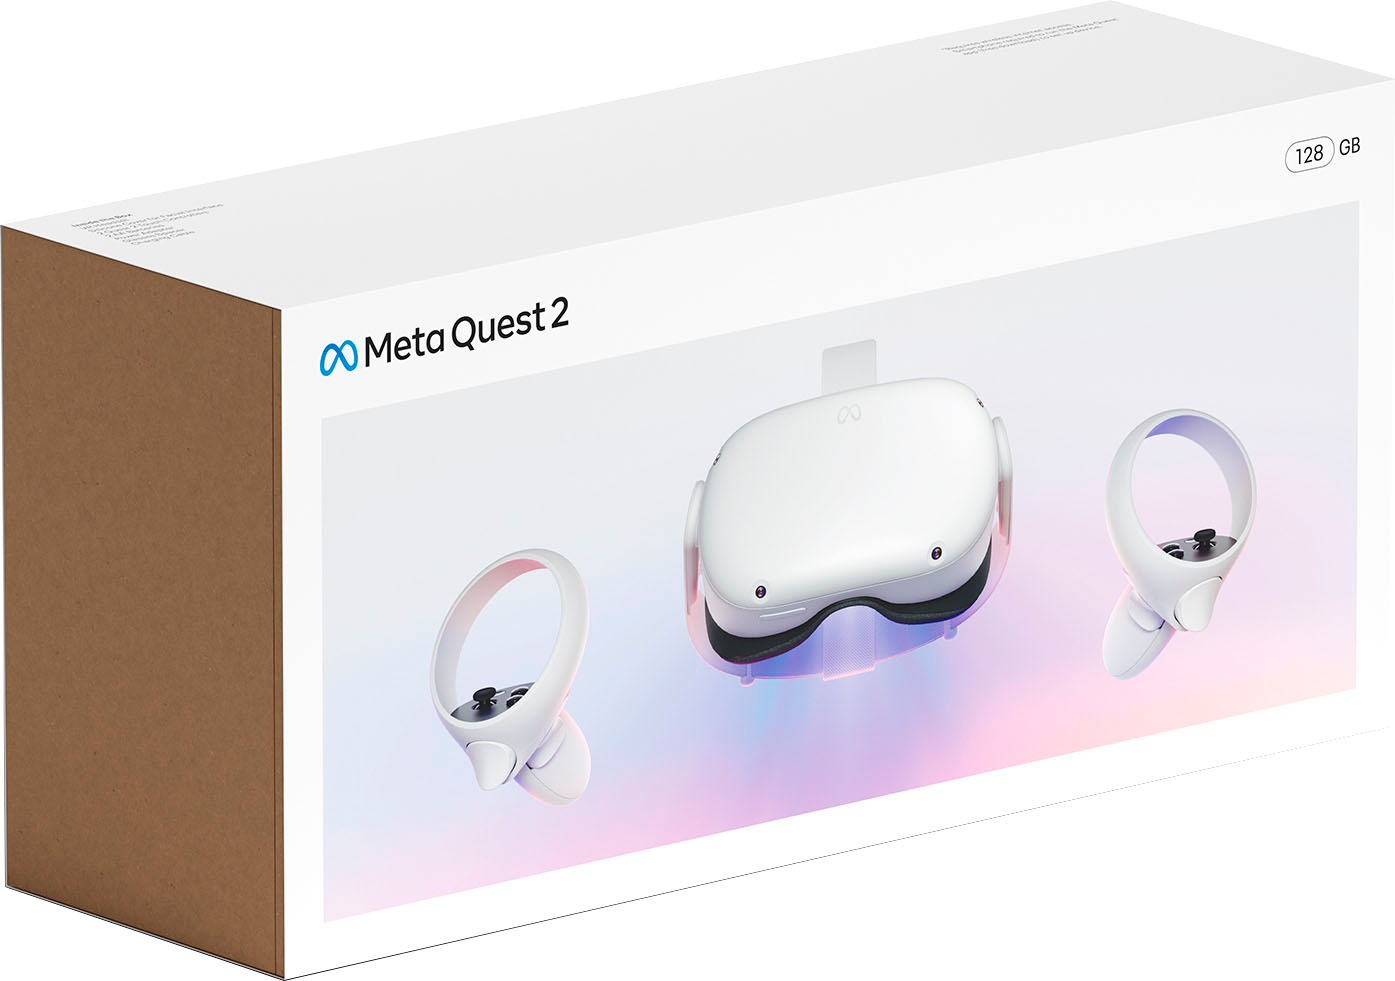 A Meta Quest 2 headset box